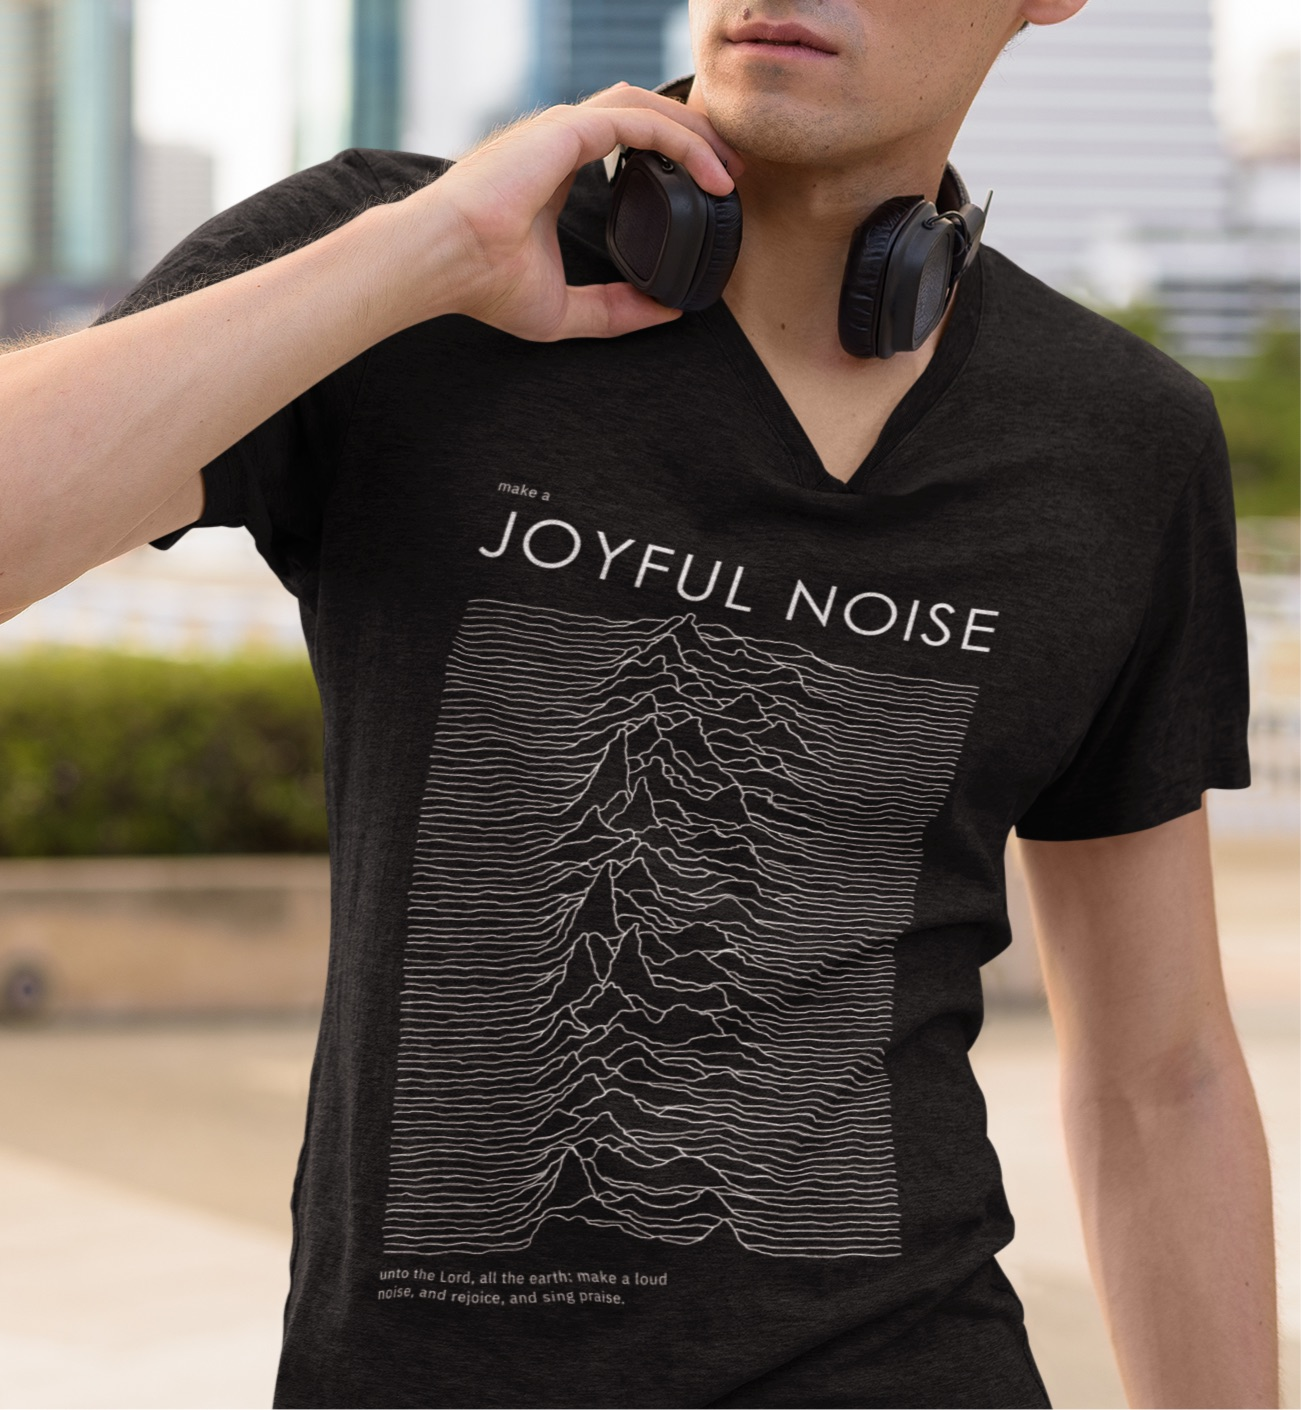 "joyful noise" psalms bible quote shirt joy sound wave pattern